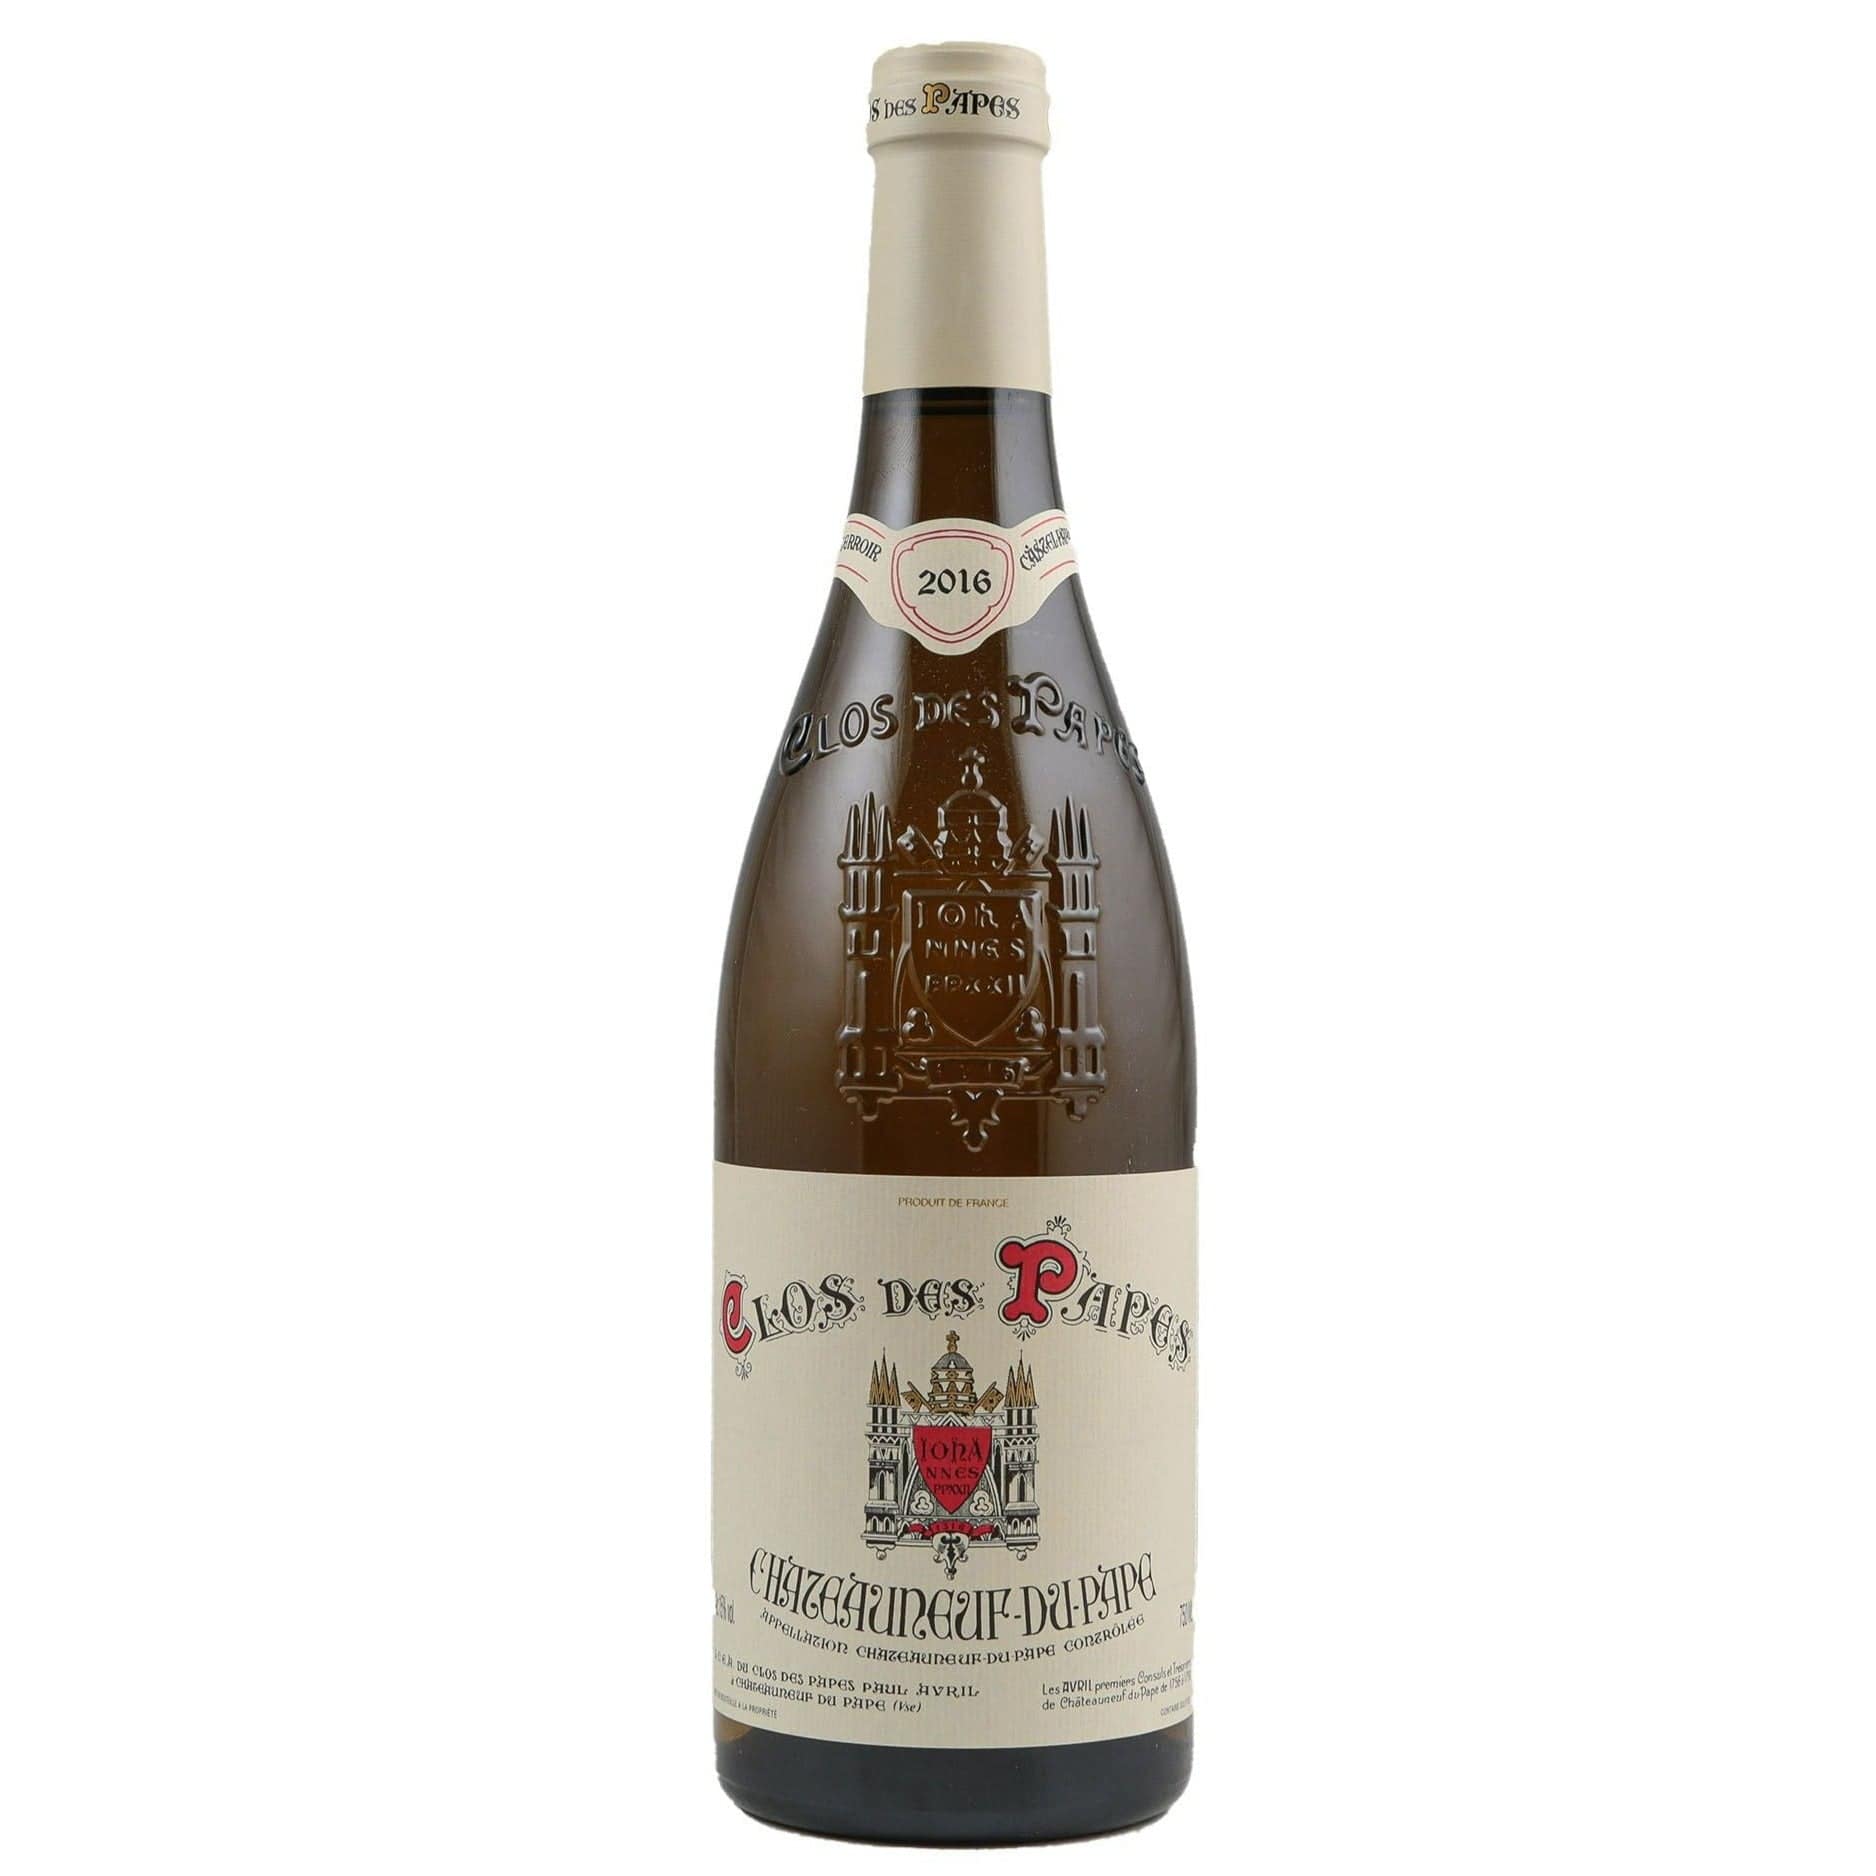 Single bottle of Red wine Paul Avril Clos des Papes, CDP Blanc, Chateauneuf du Pape, 2016 100% Grenache Blanc